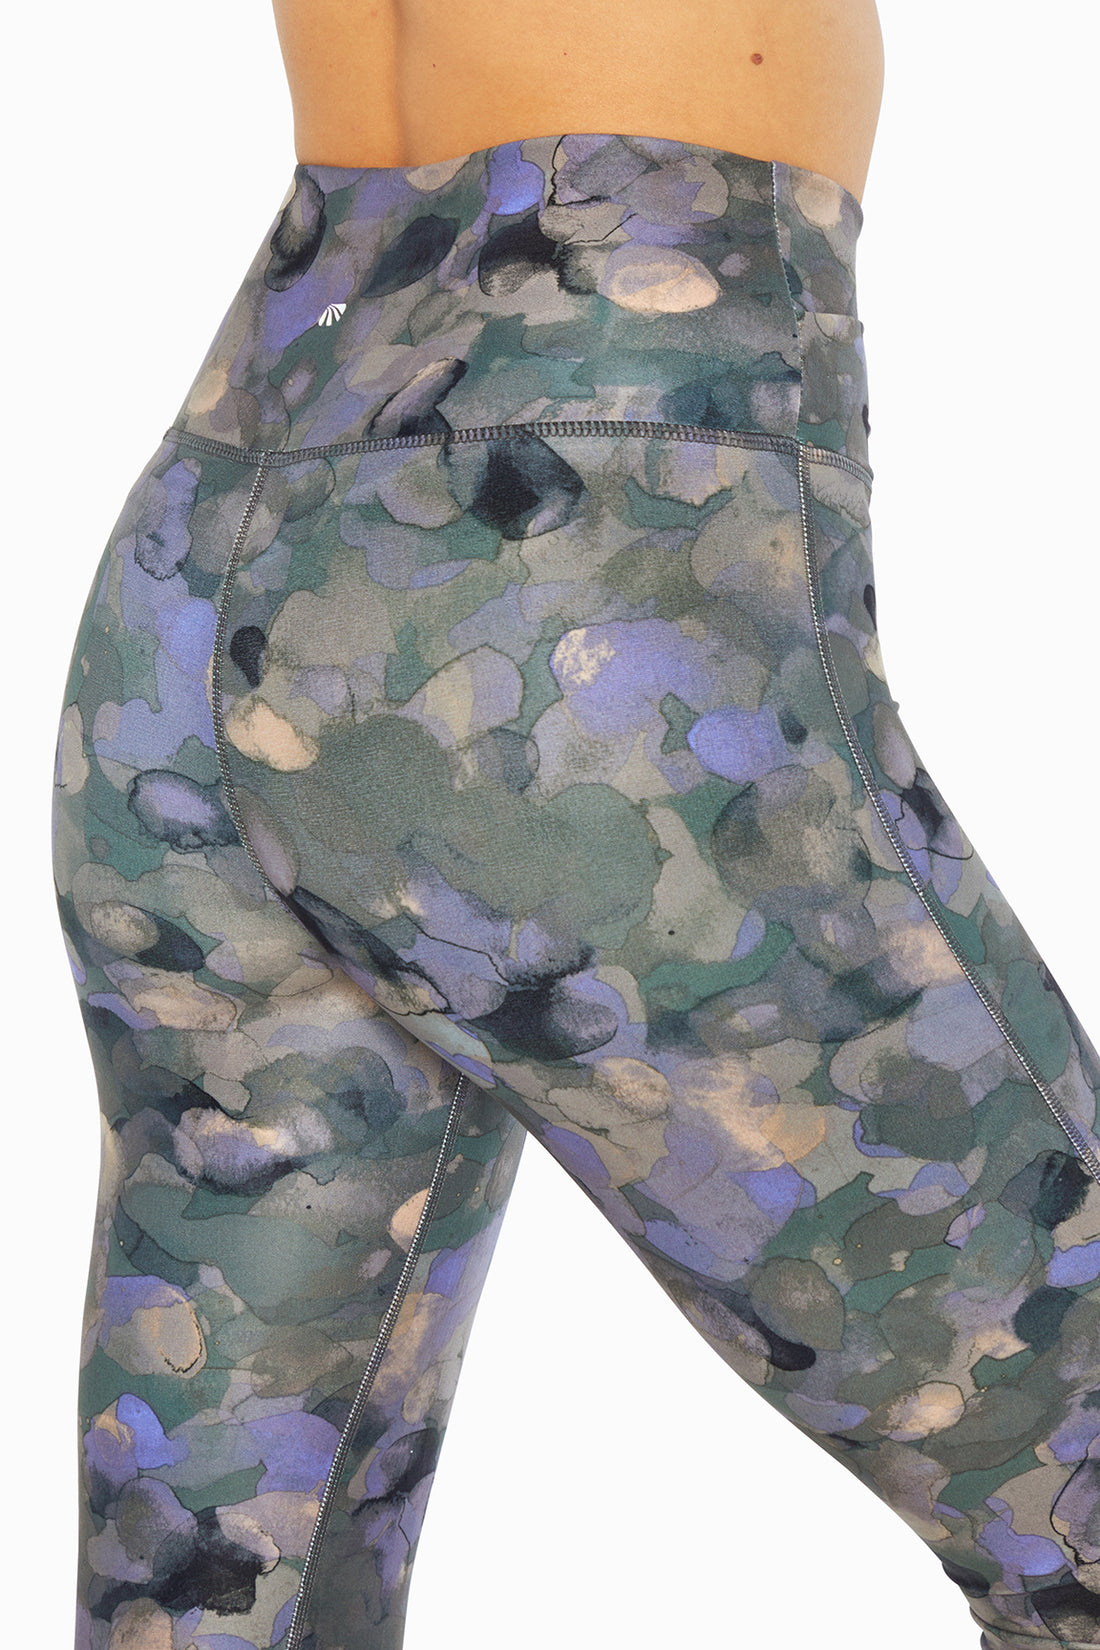 NEW Marika Green Camo Camouflage High Waist Capri Leggings Yoga